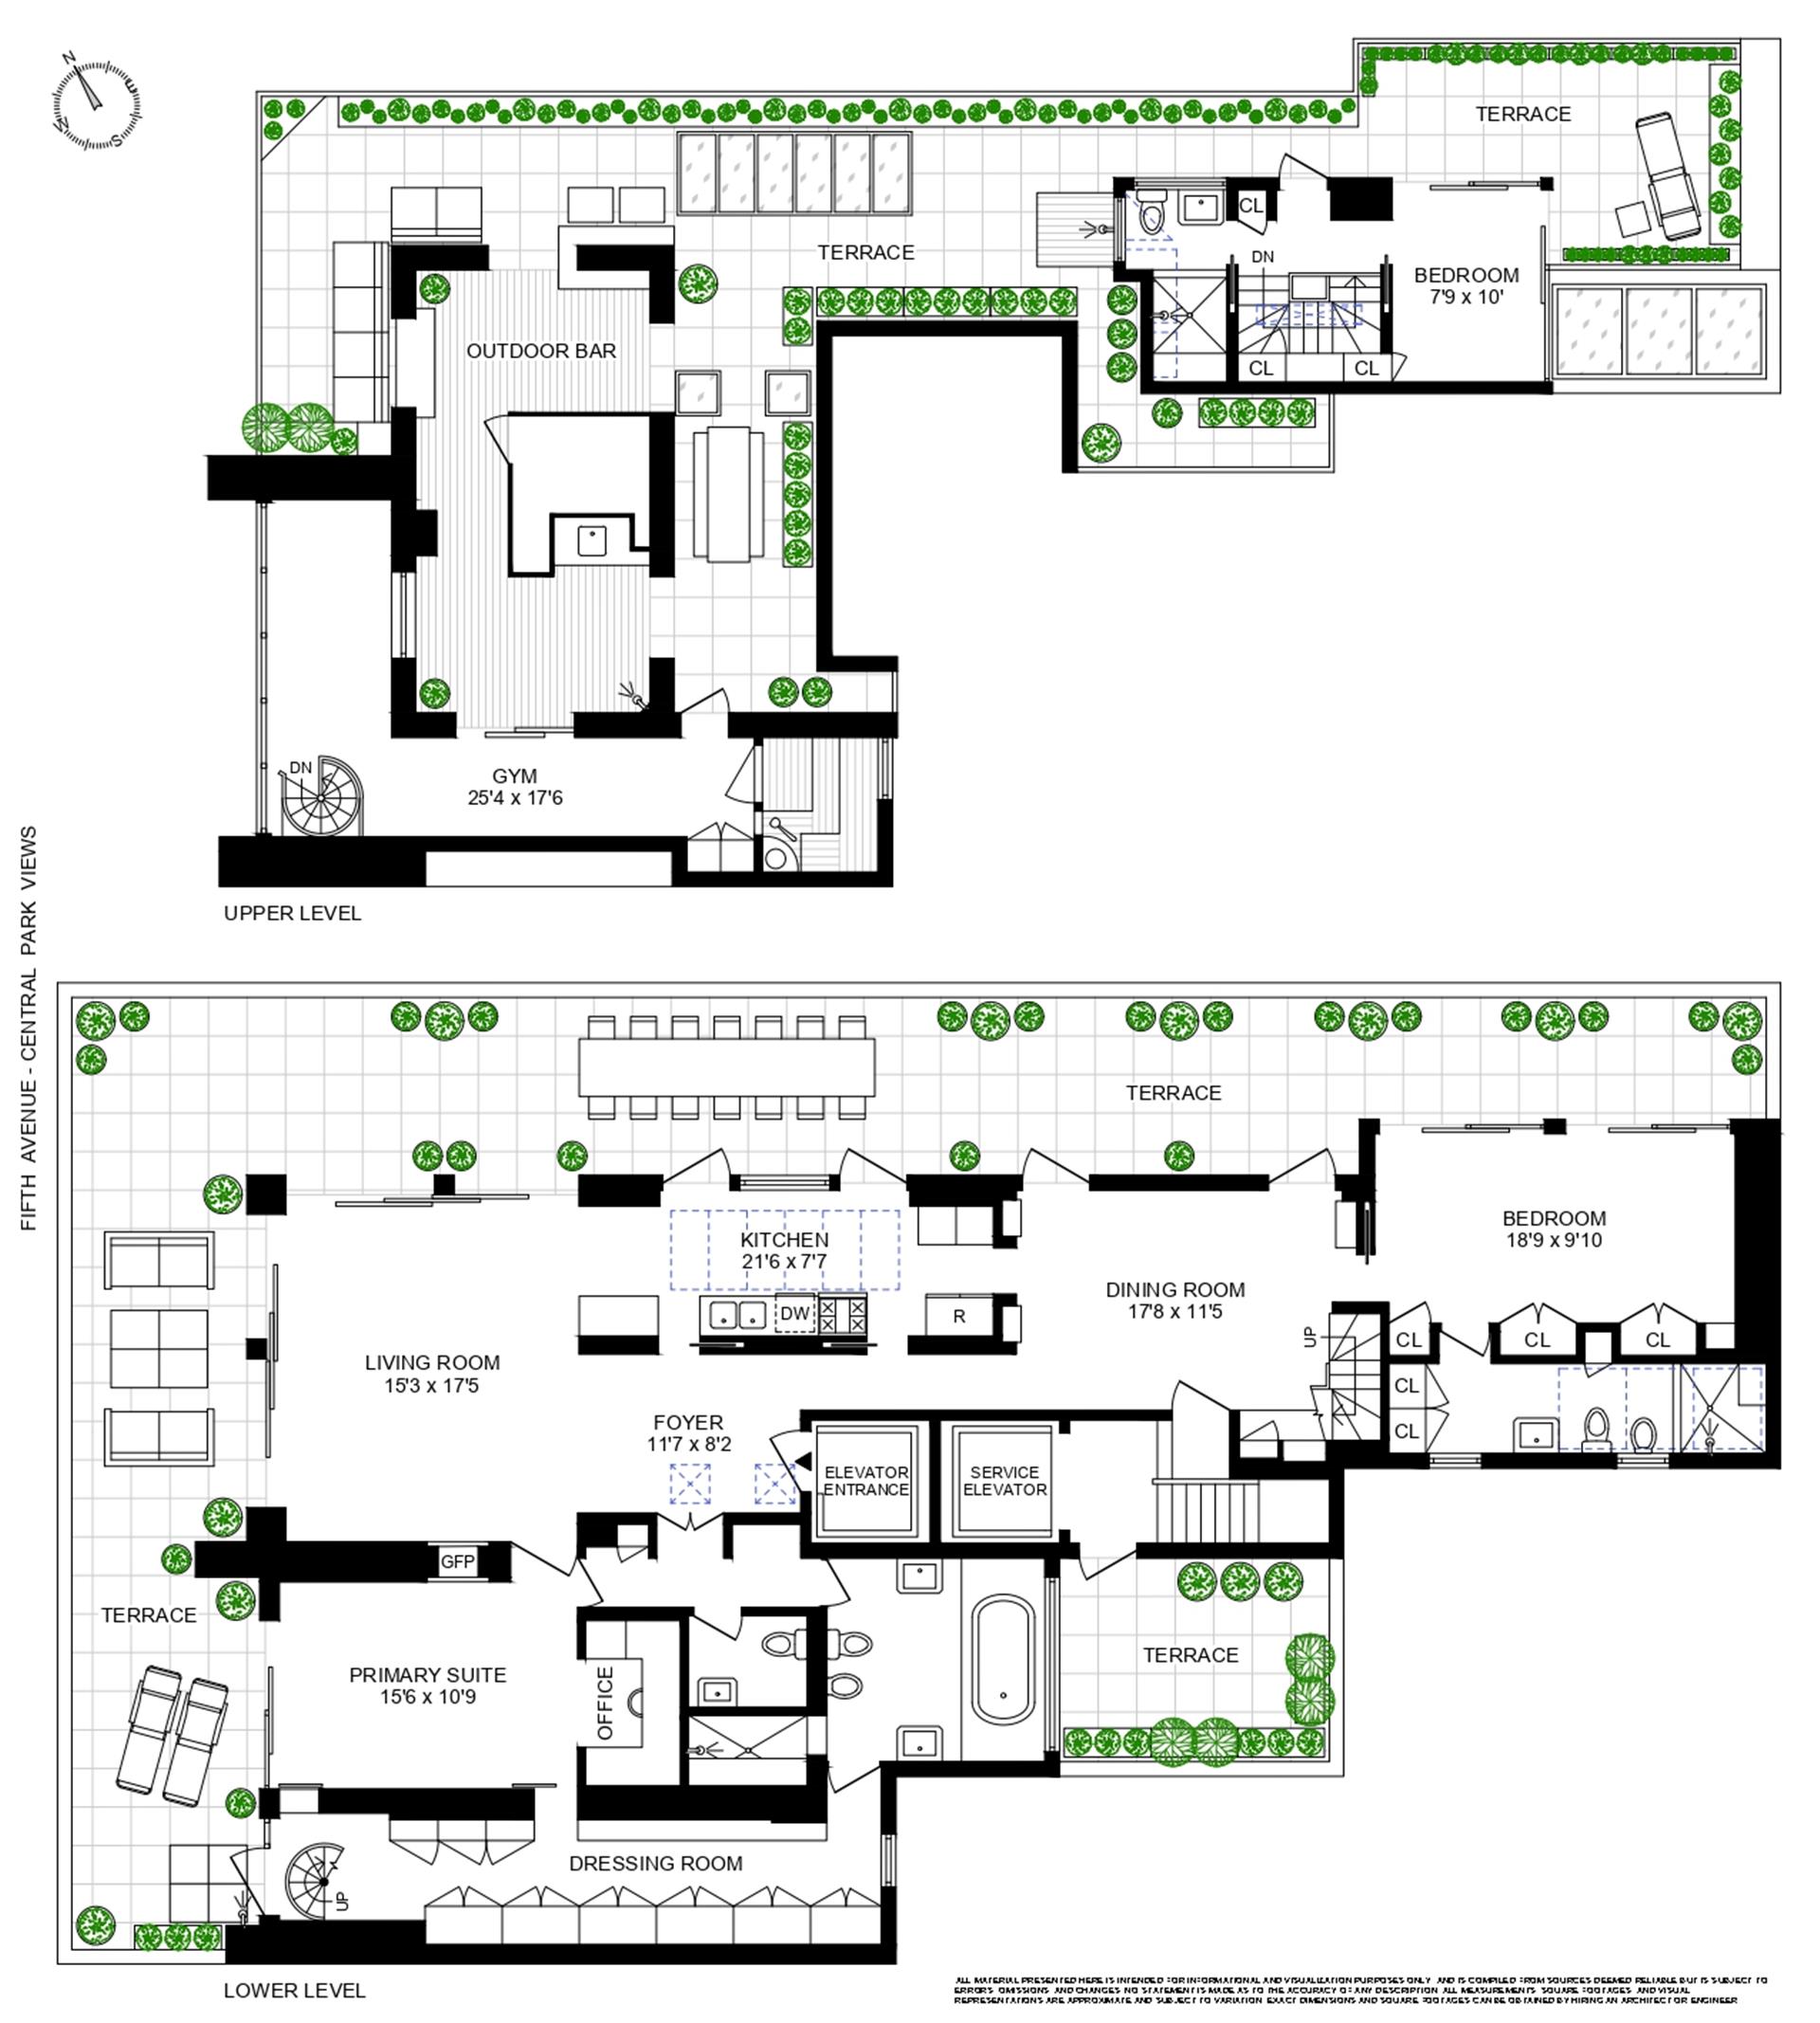 Floorplan for 988 5th Avenue, PH